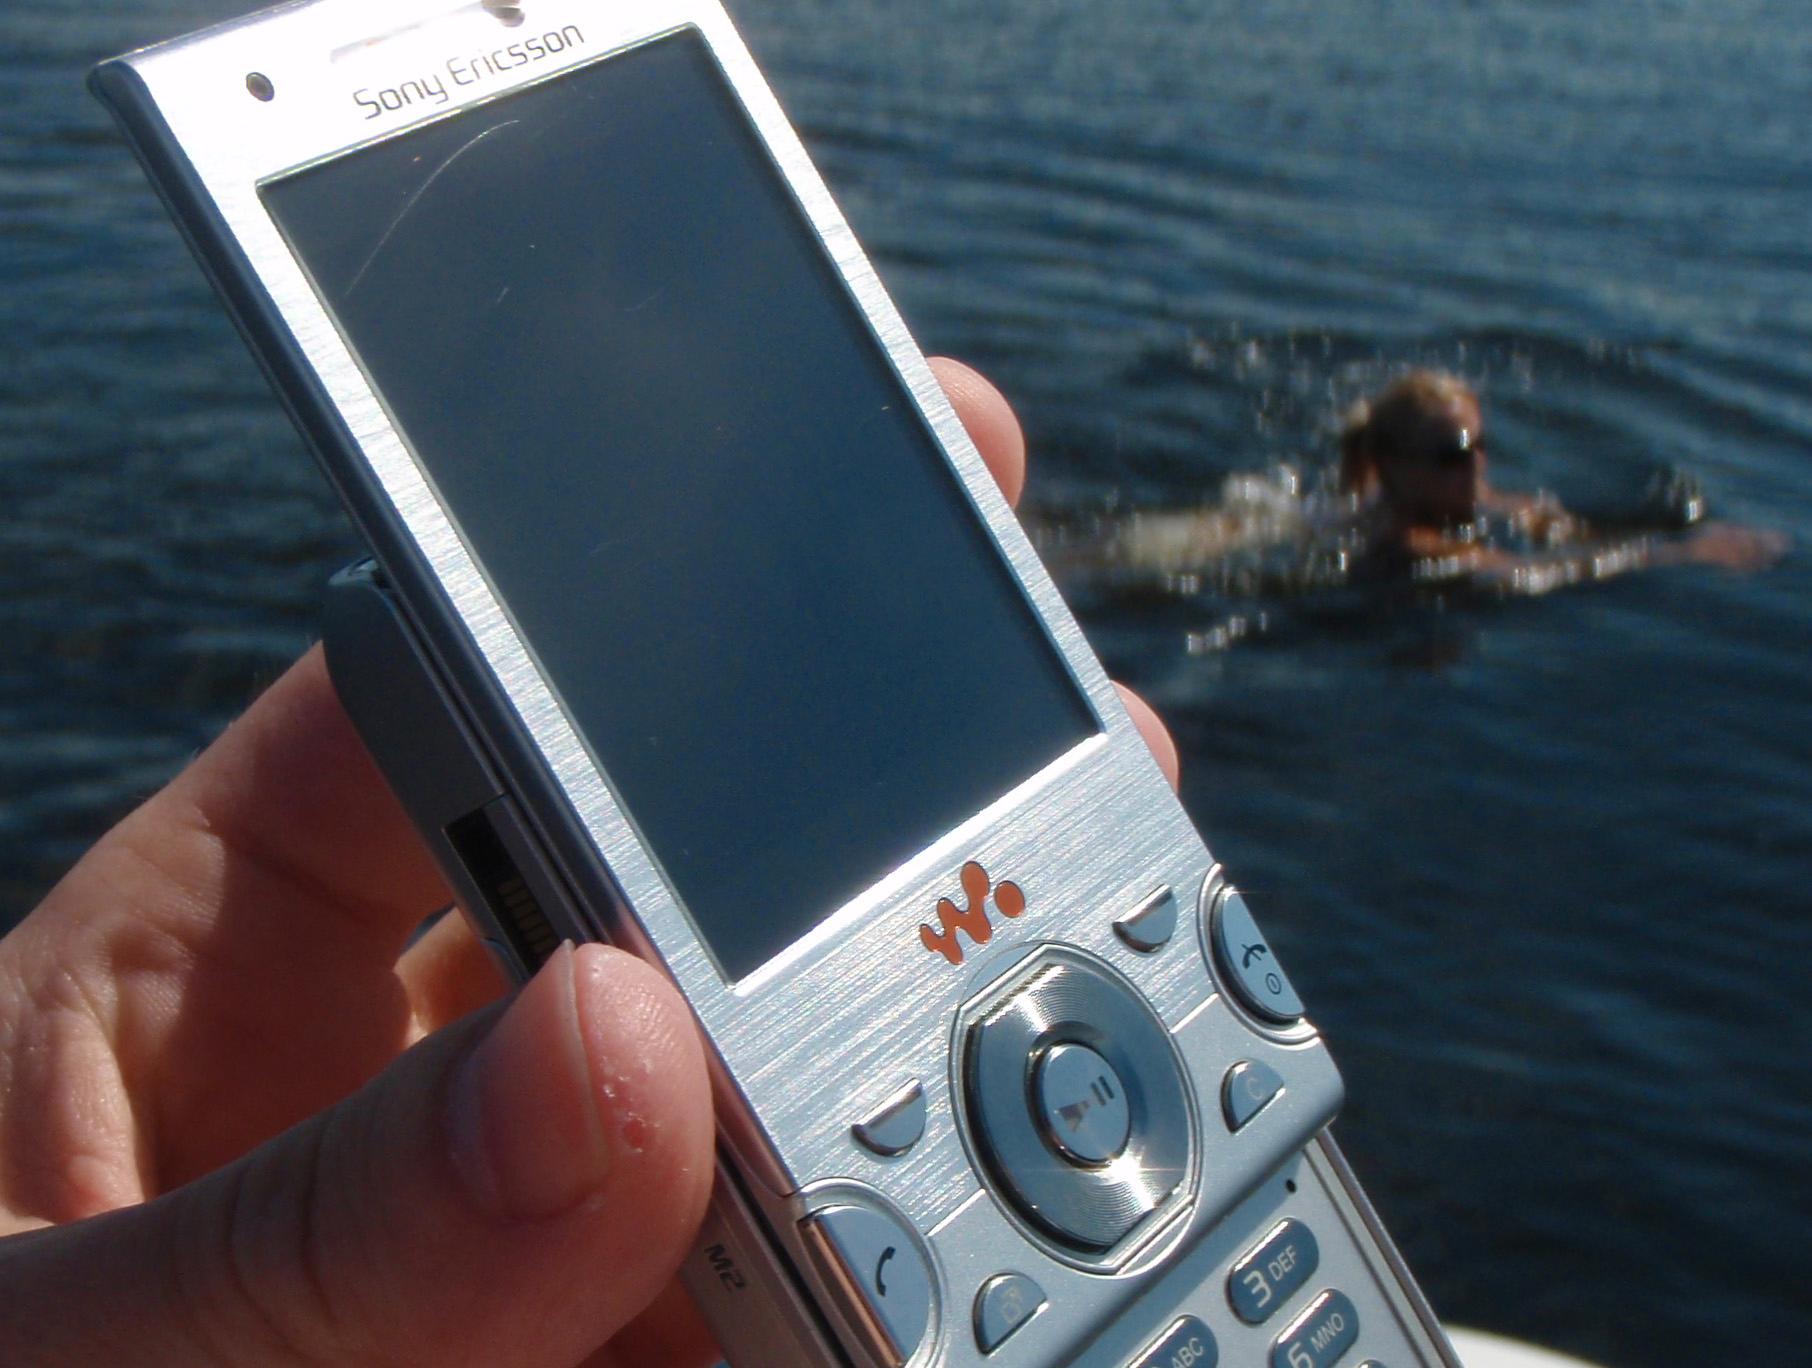 W995 er normalt robust, men den trives som de fleste andre telefoner best på land.